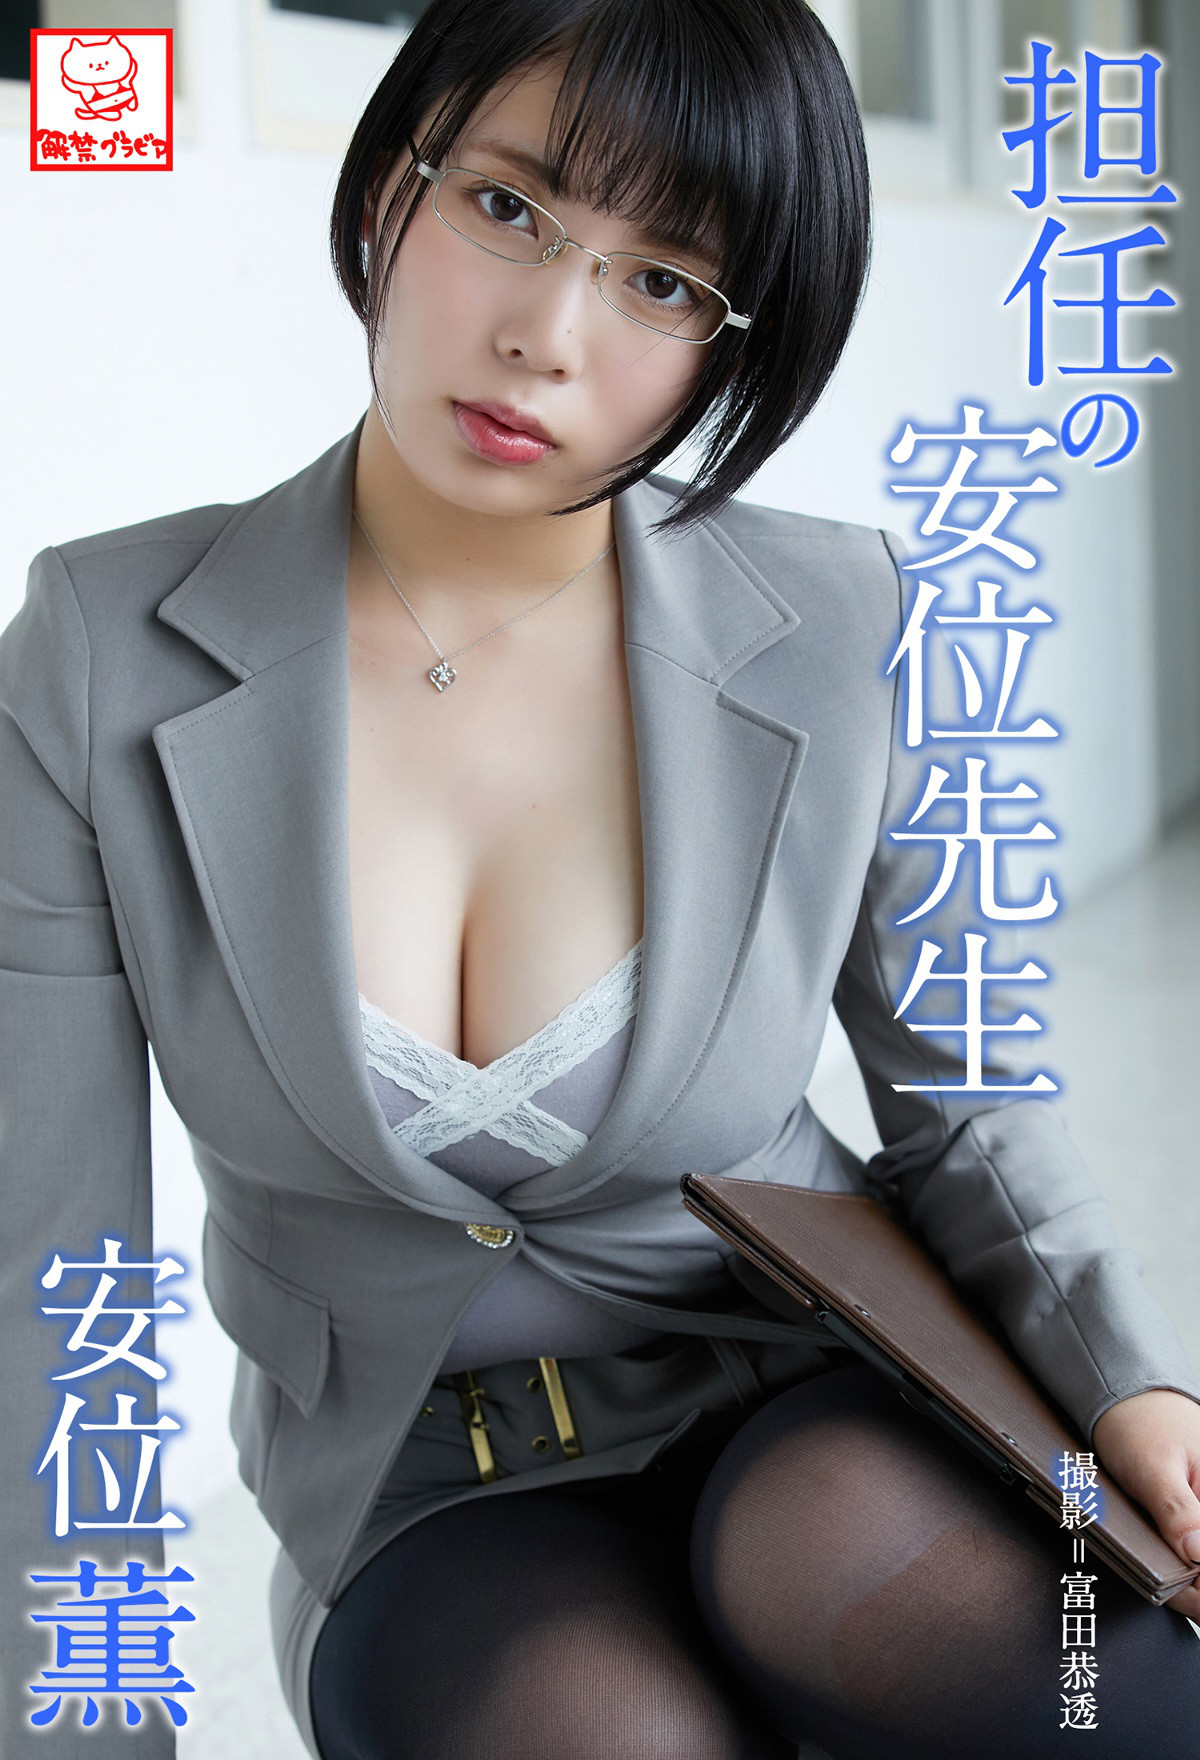 [Azuki Kaoru] The sexy female teacher dresses up to charm everyone